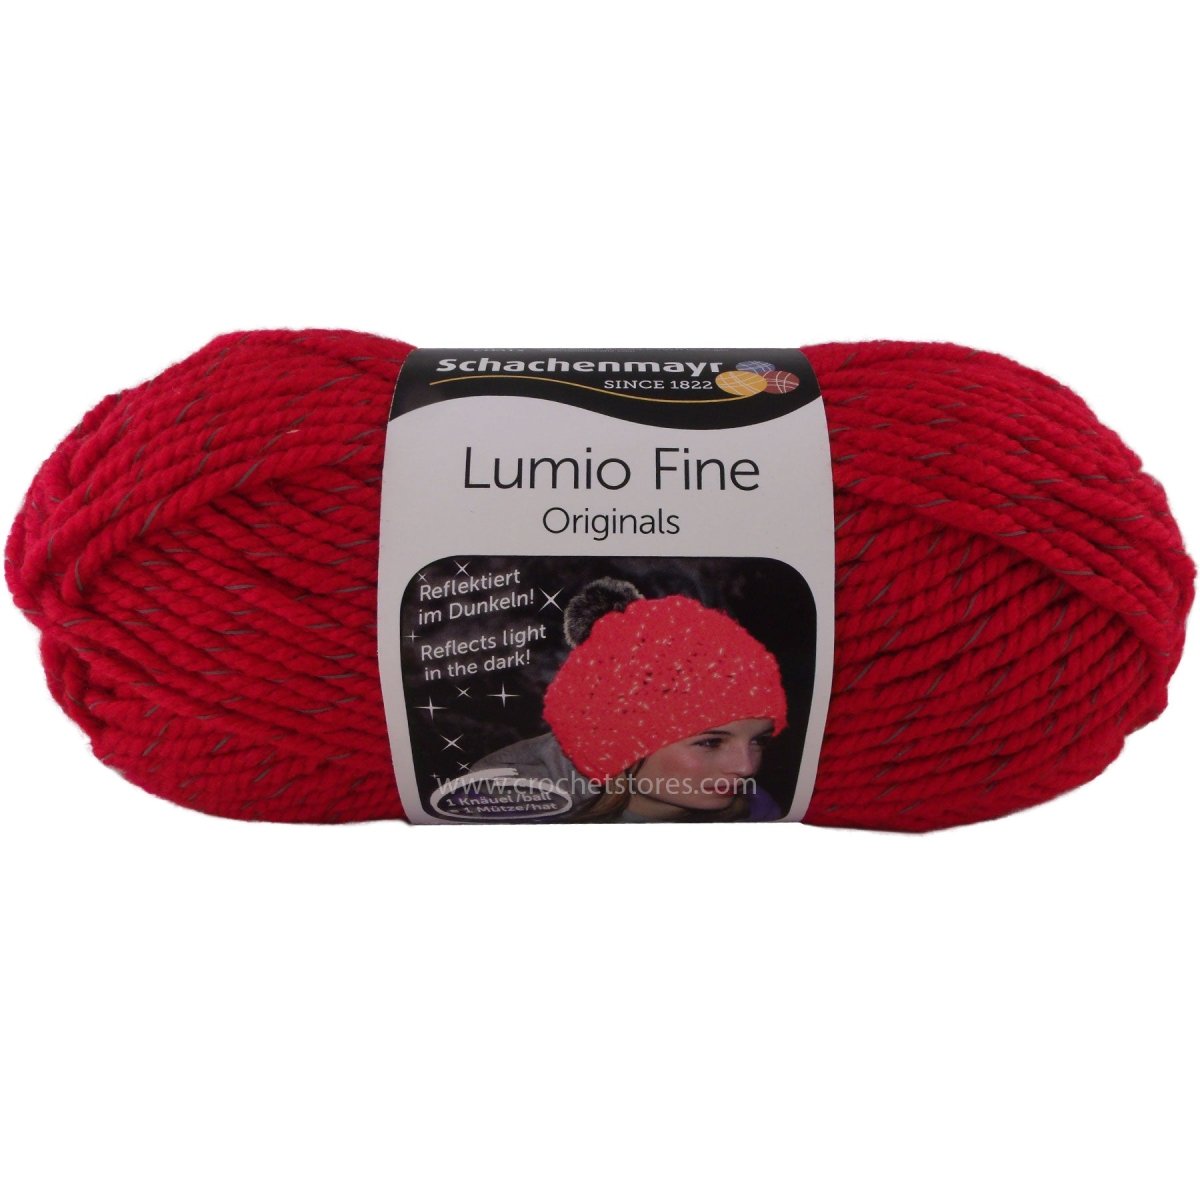 LUMIO FINE - Crochetstores9807557-1304053859108706